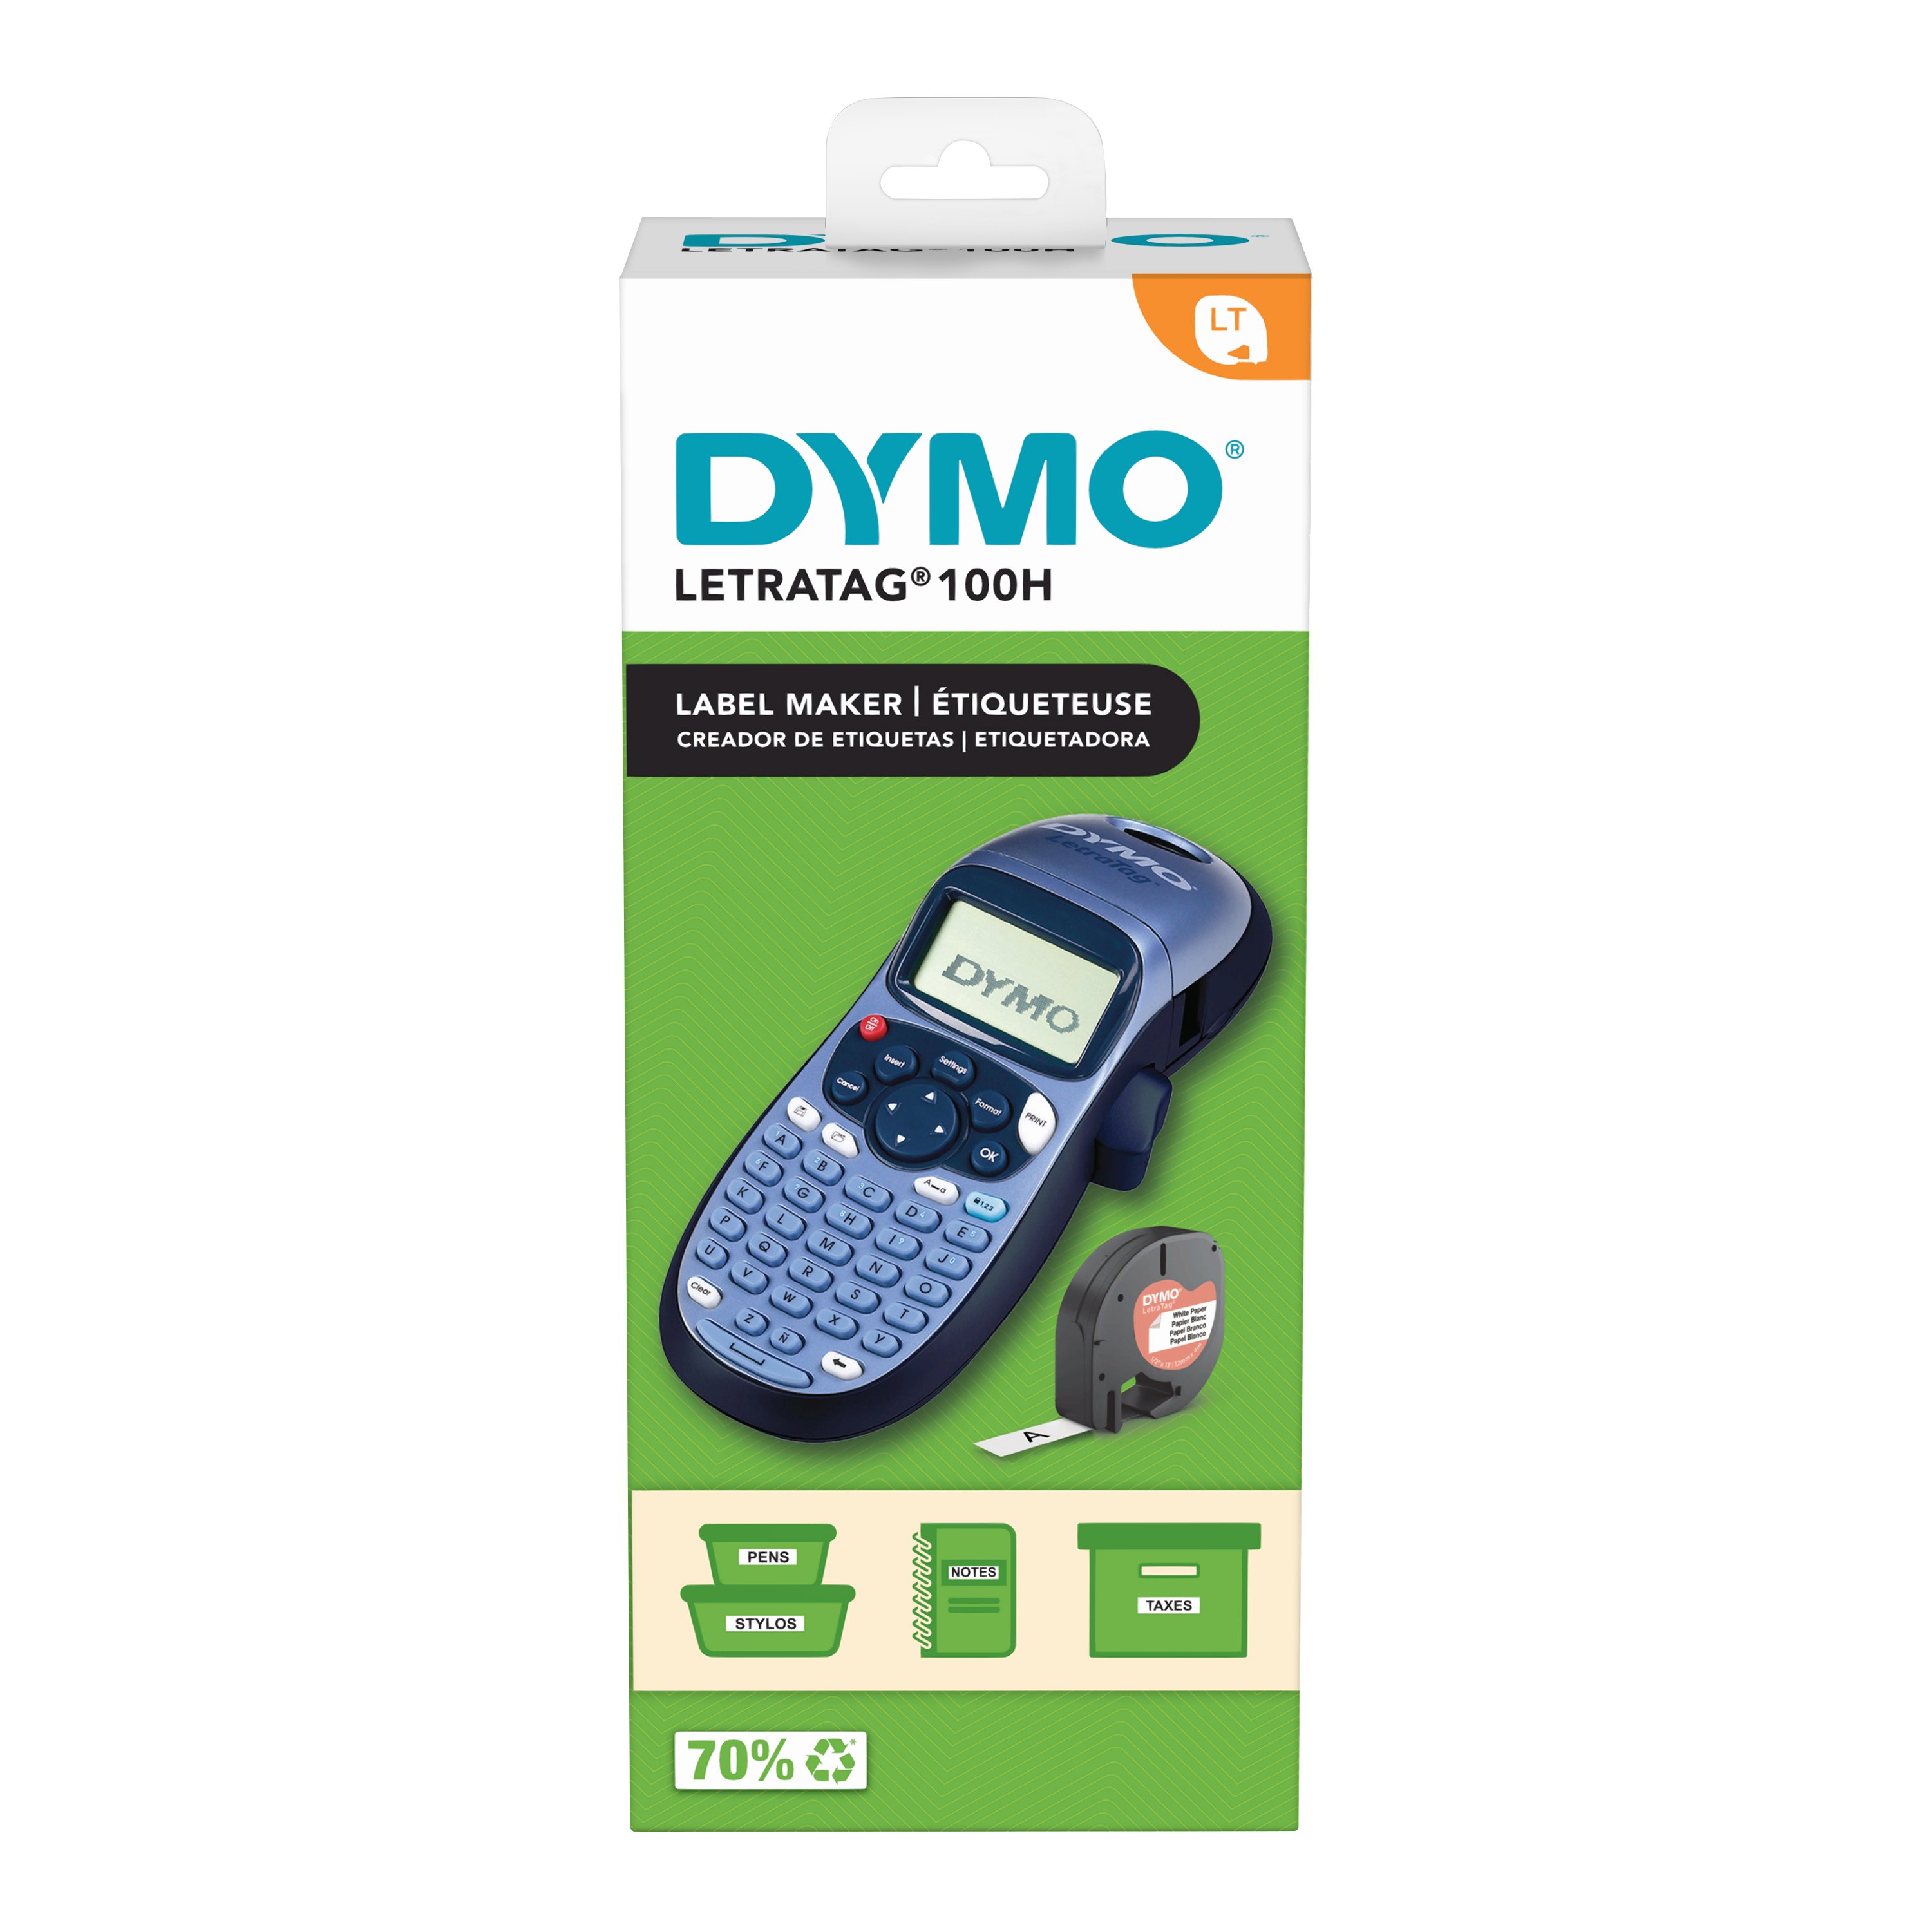 DYMO - LetraTag 100H ABC Label Maker (2174576) - Kontor og skoleutstyr